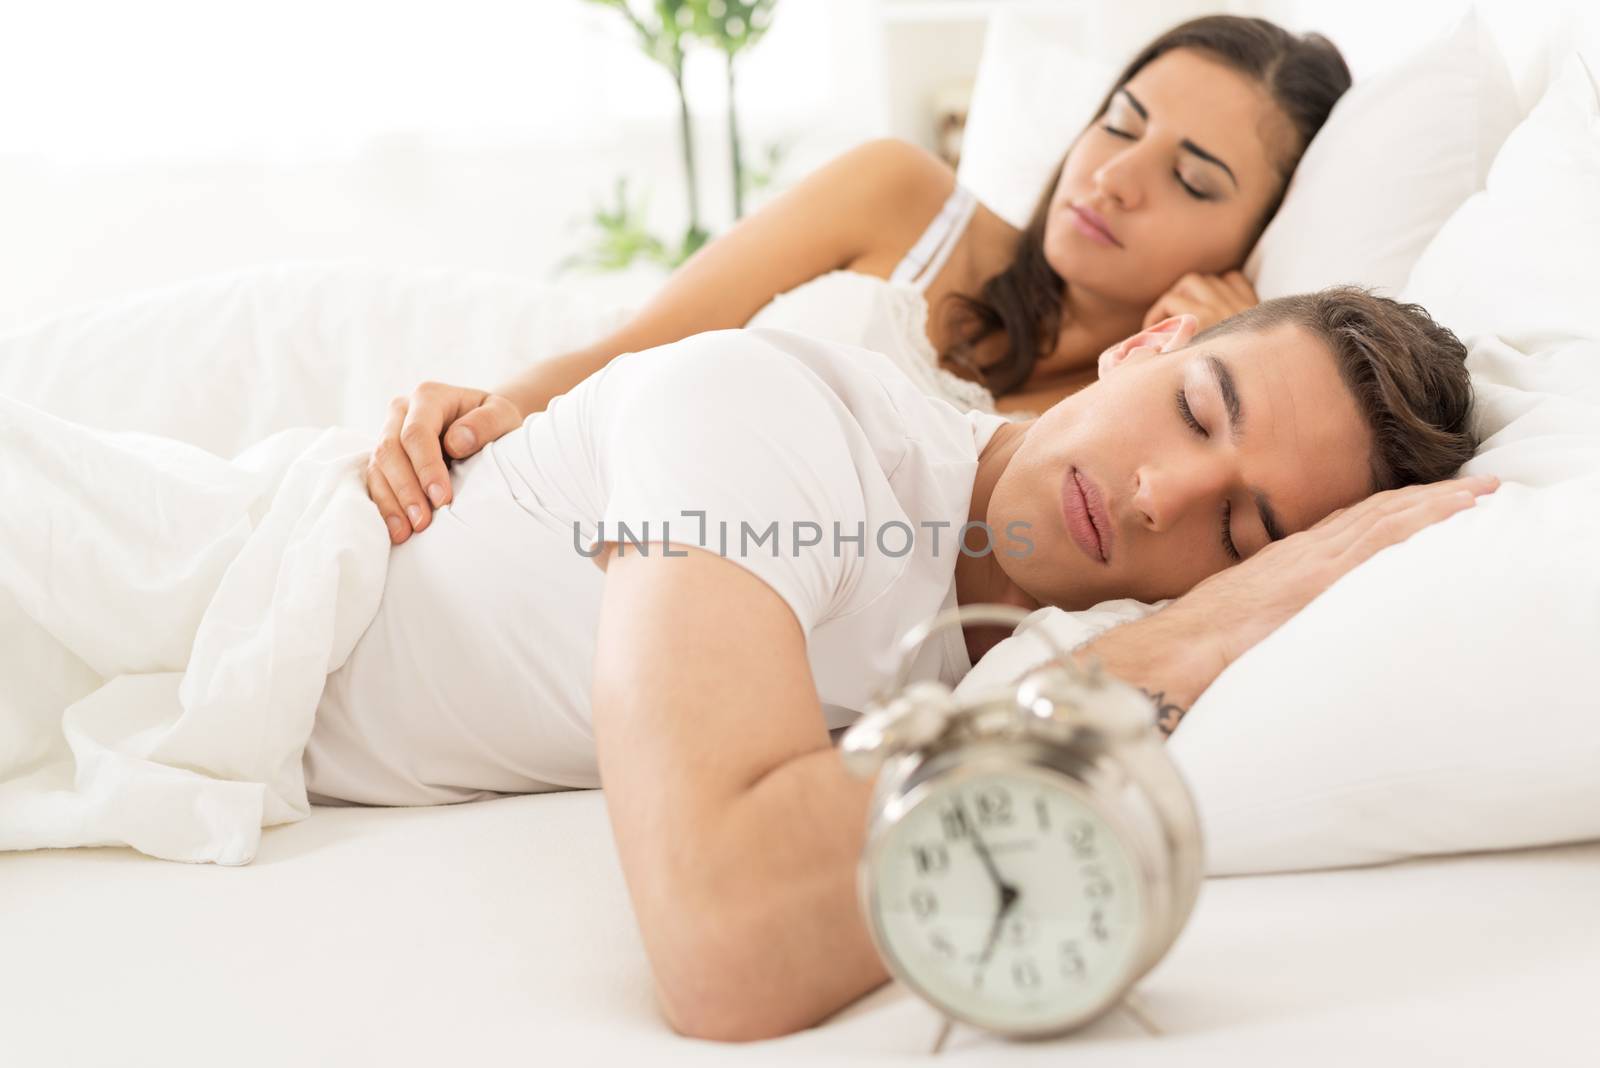 Young heterosexual couple sleeping in bed next to an alarm clock.